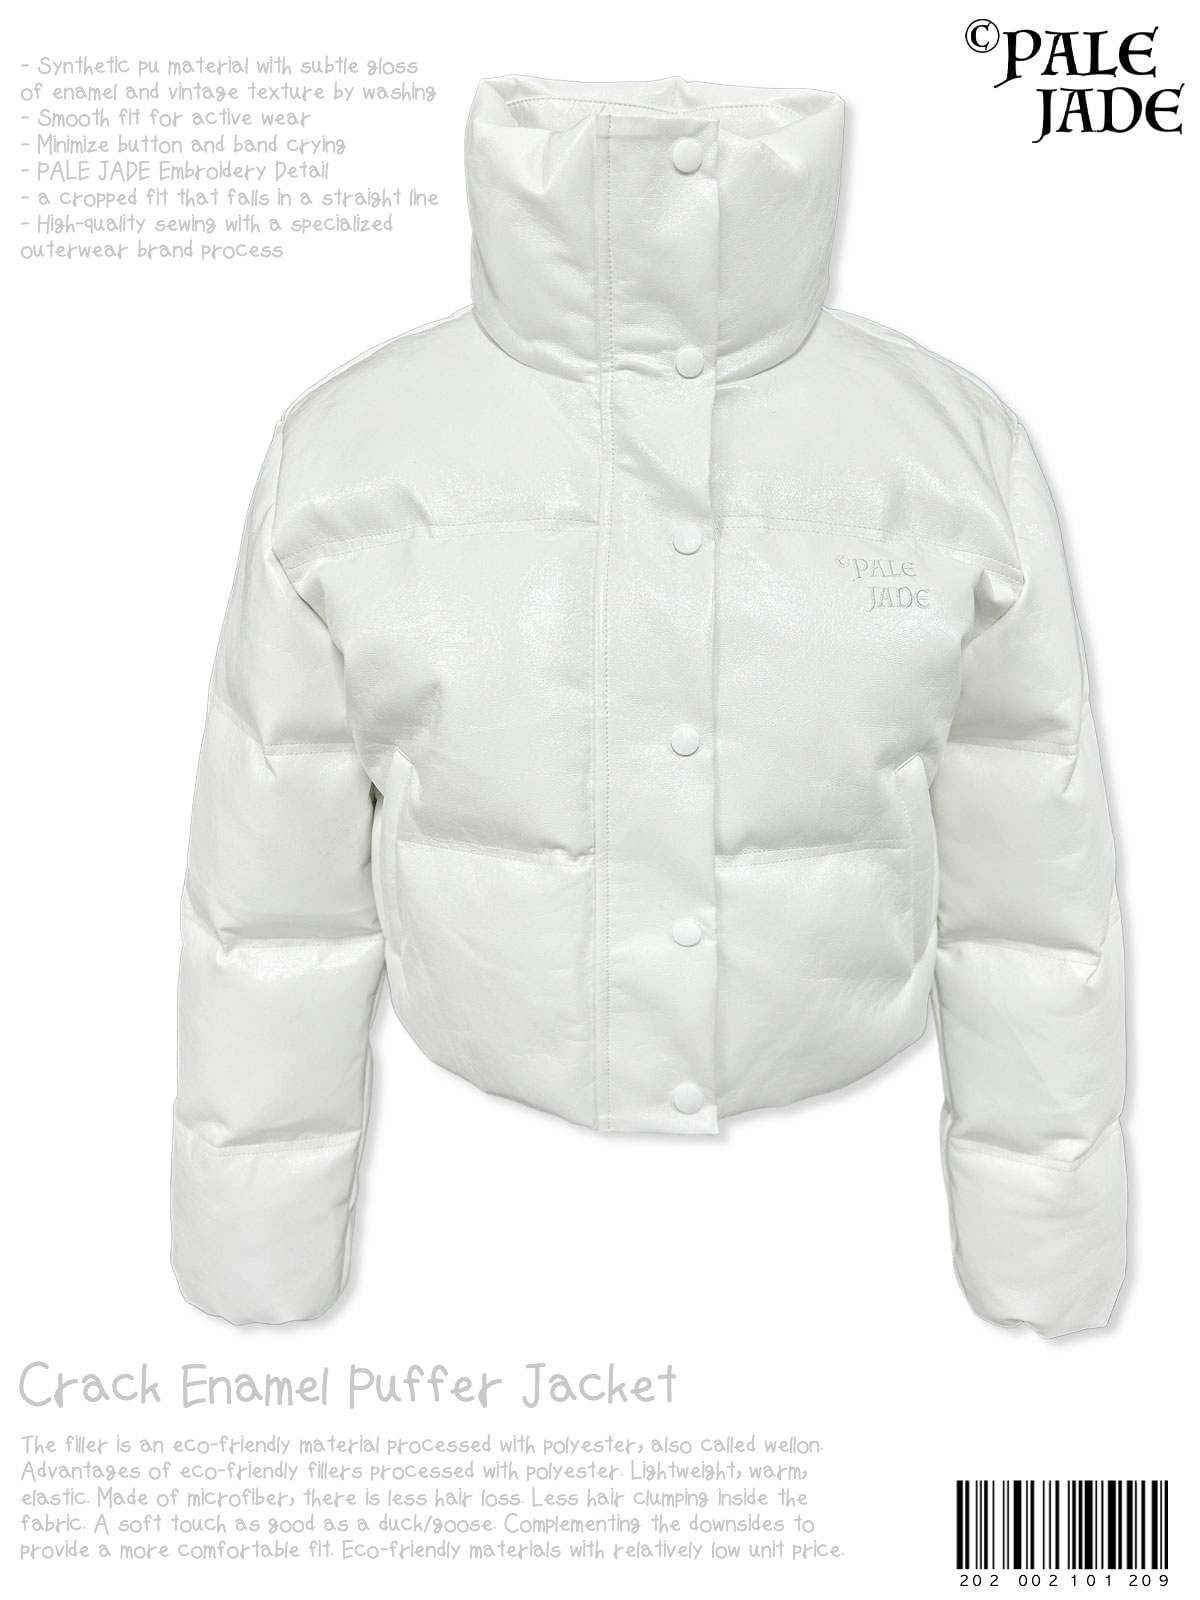 Crack Enamel Puffer Jacket in Ivory